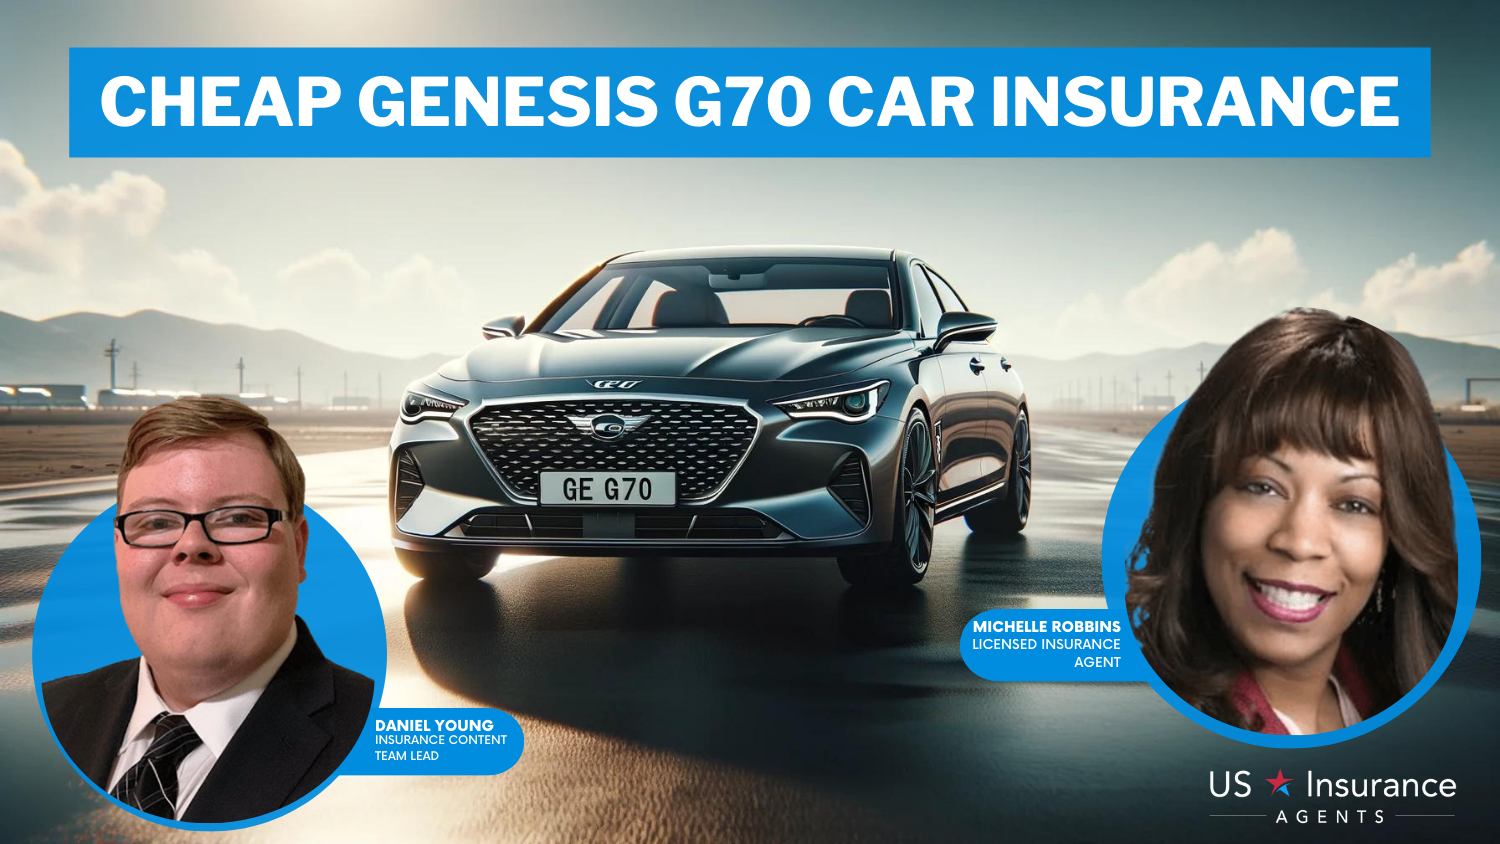 Geico, USAA and Statefarm: Cheap Genesis G70 Car Insurance